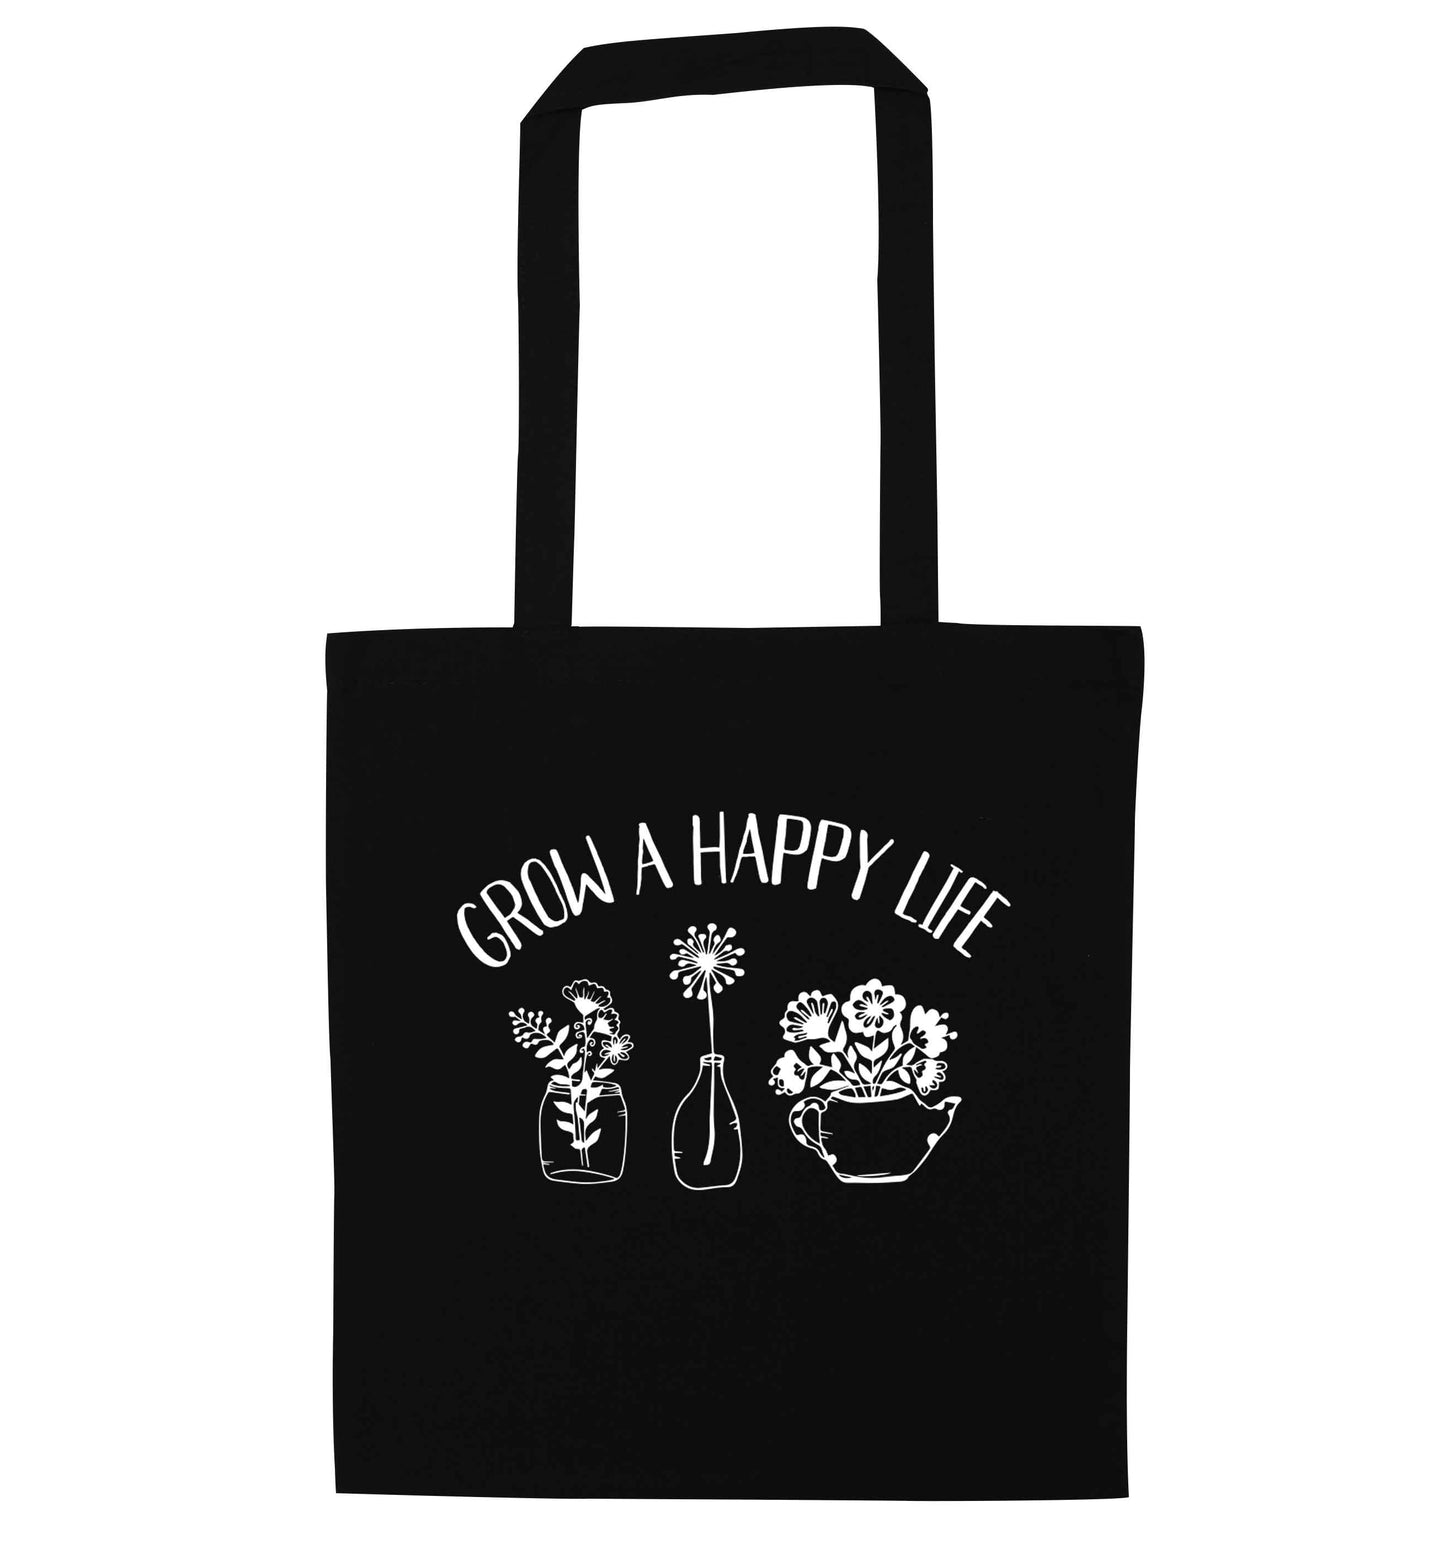 Grow a happy life black tote bag